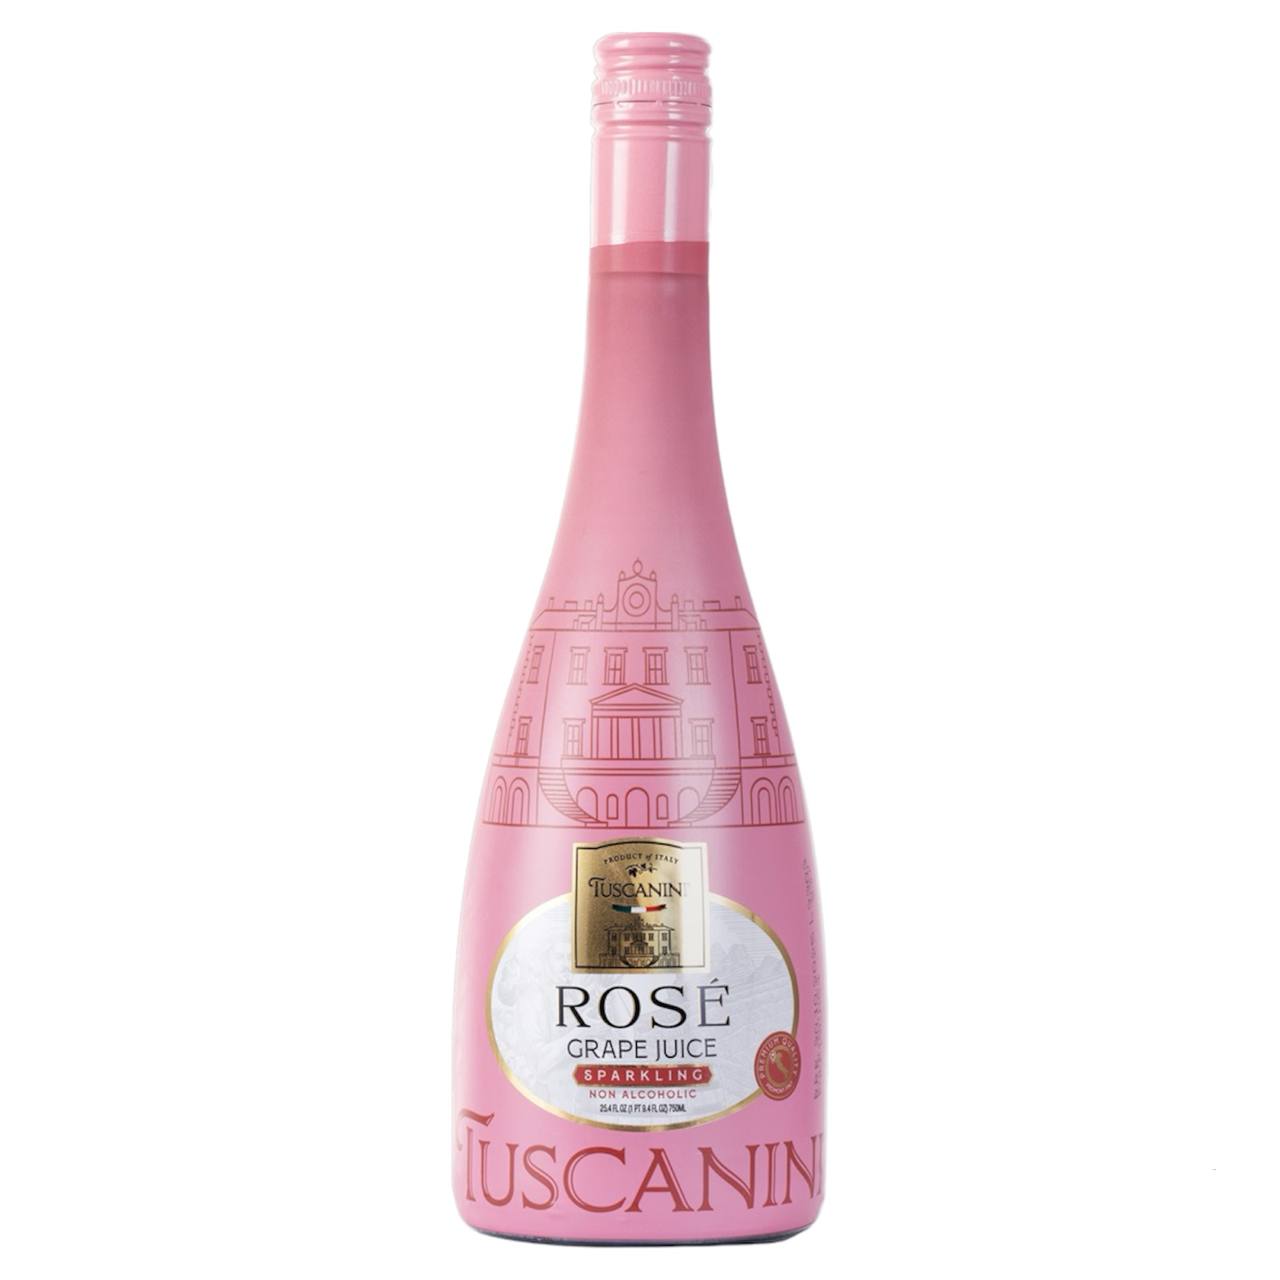 Tuscanini Sparkling Rose Grape Juice